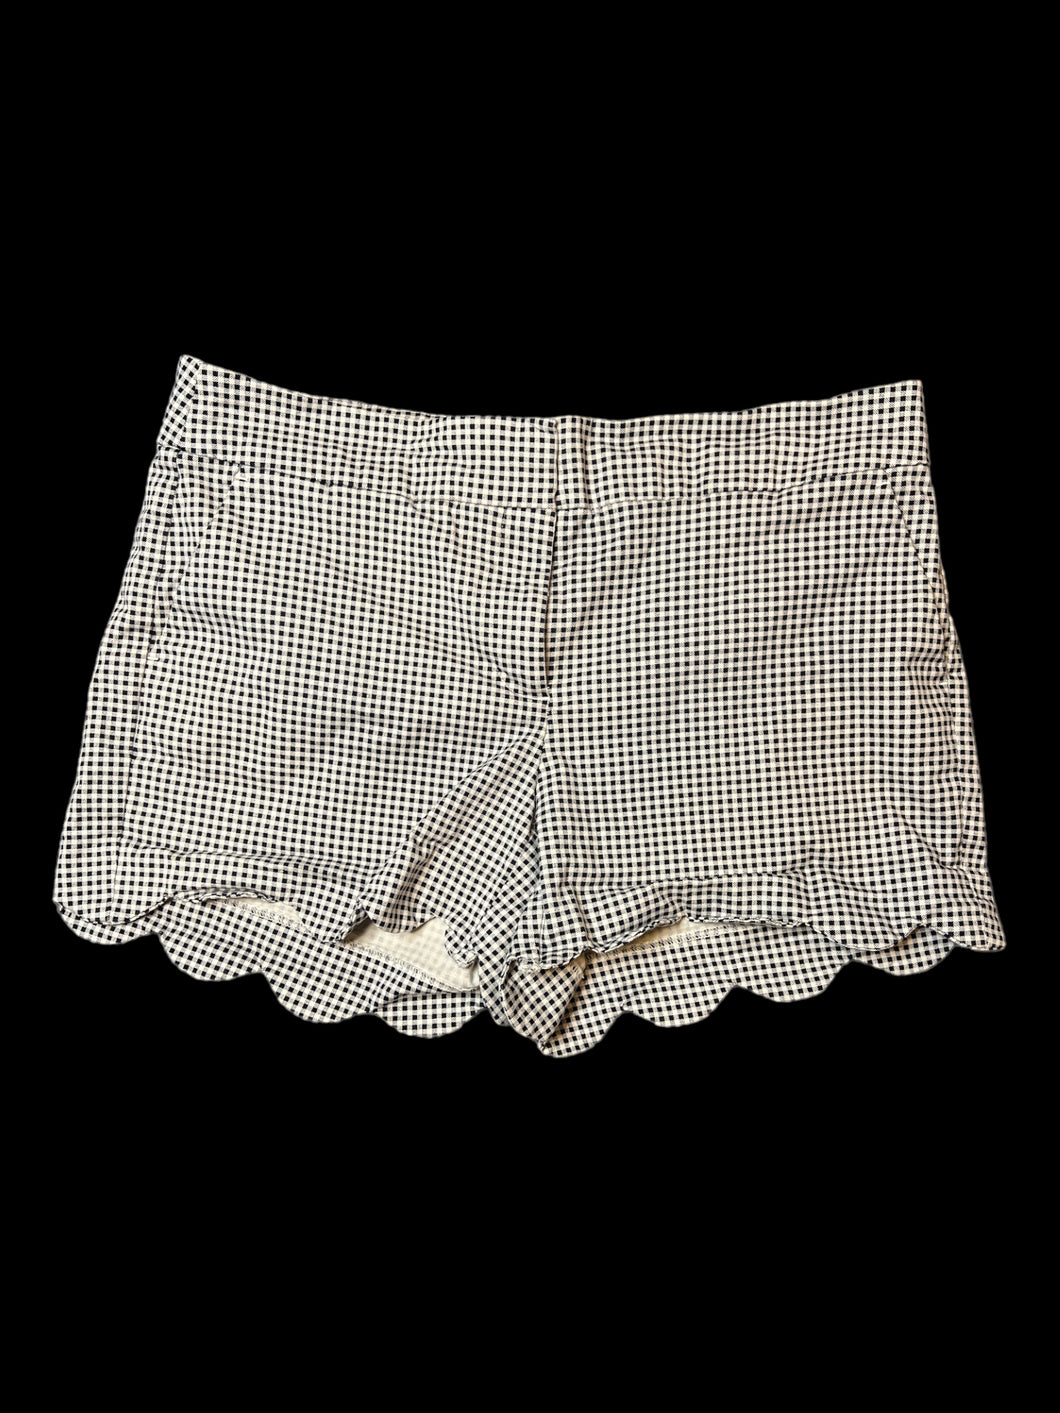 L White & black gingham high waist shorts w/ scalloped hem, pockets, & button/clasp/zipper closure